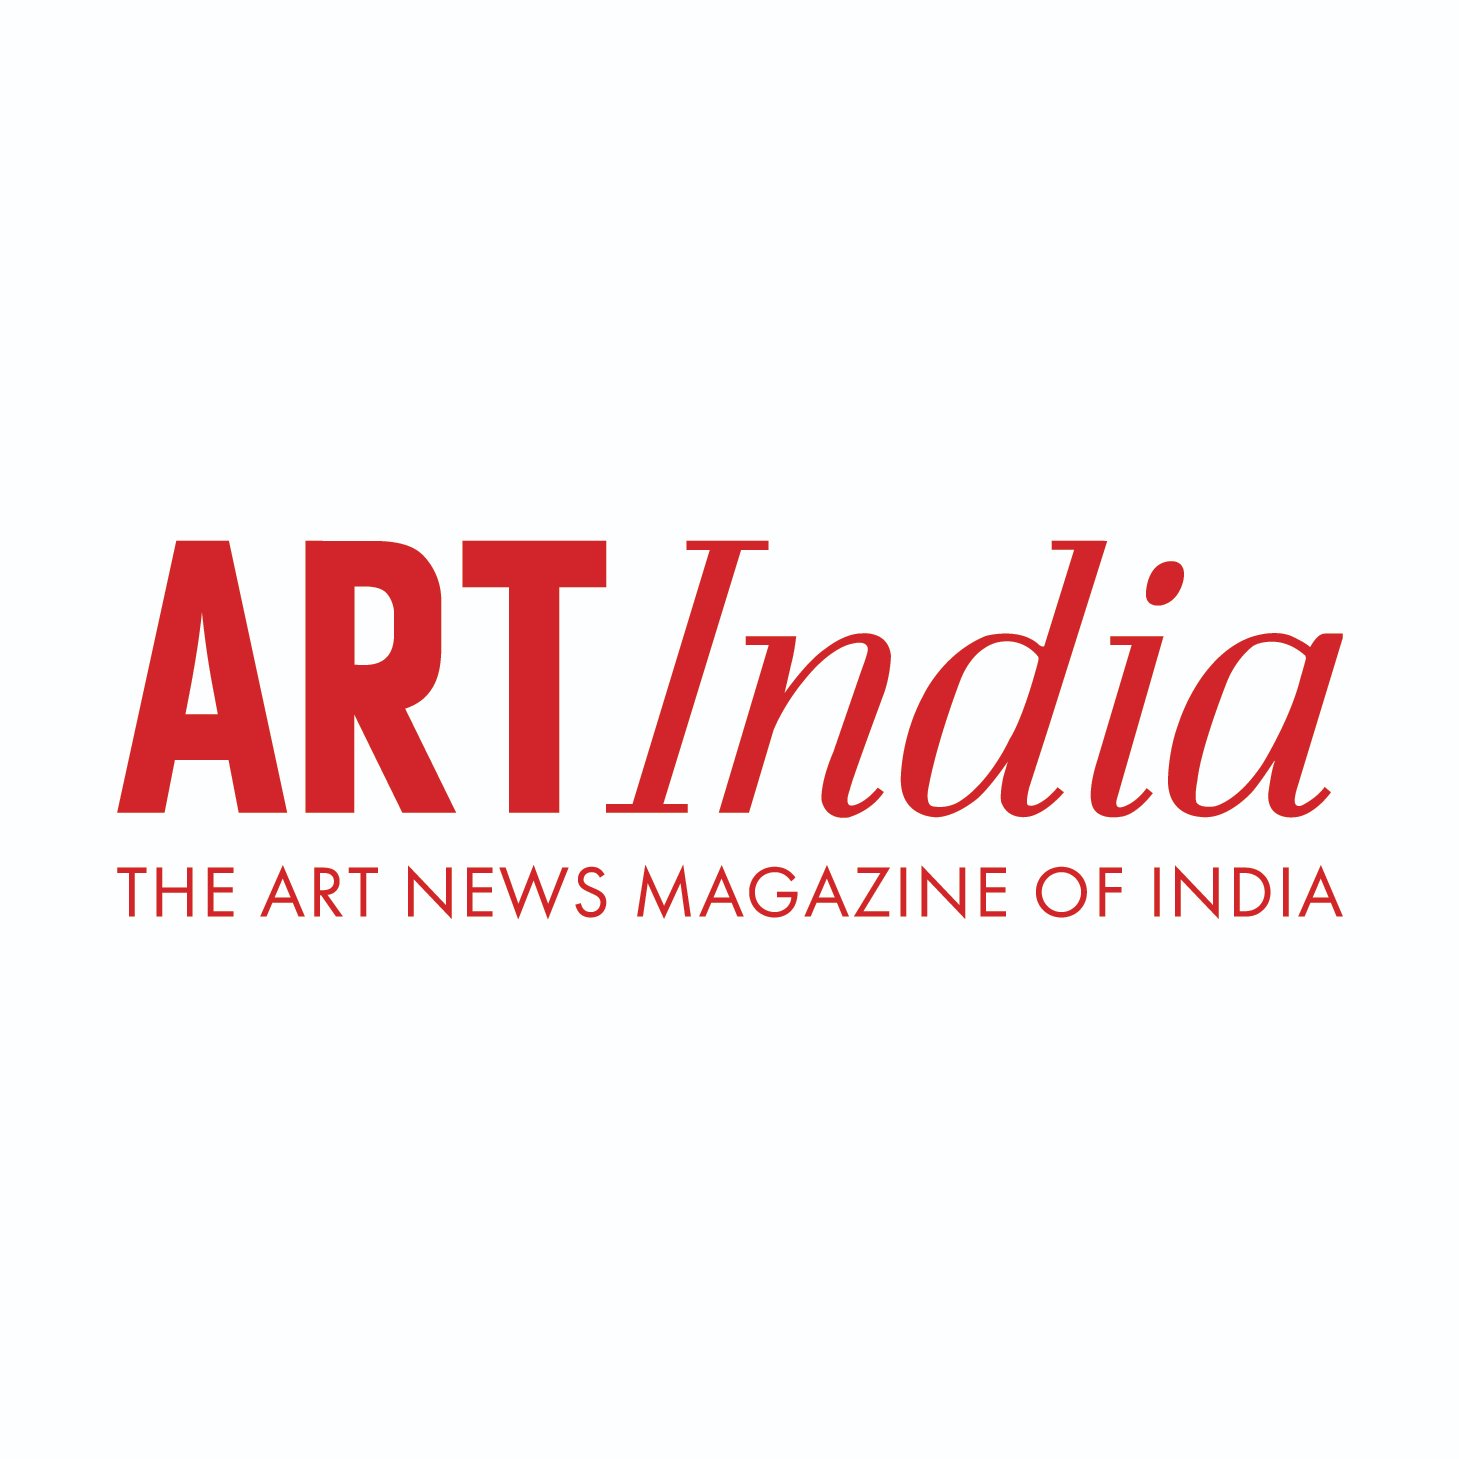 The art news magazine of India
#art #contemporaryart #indianartscene